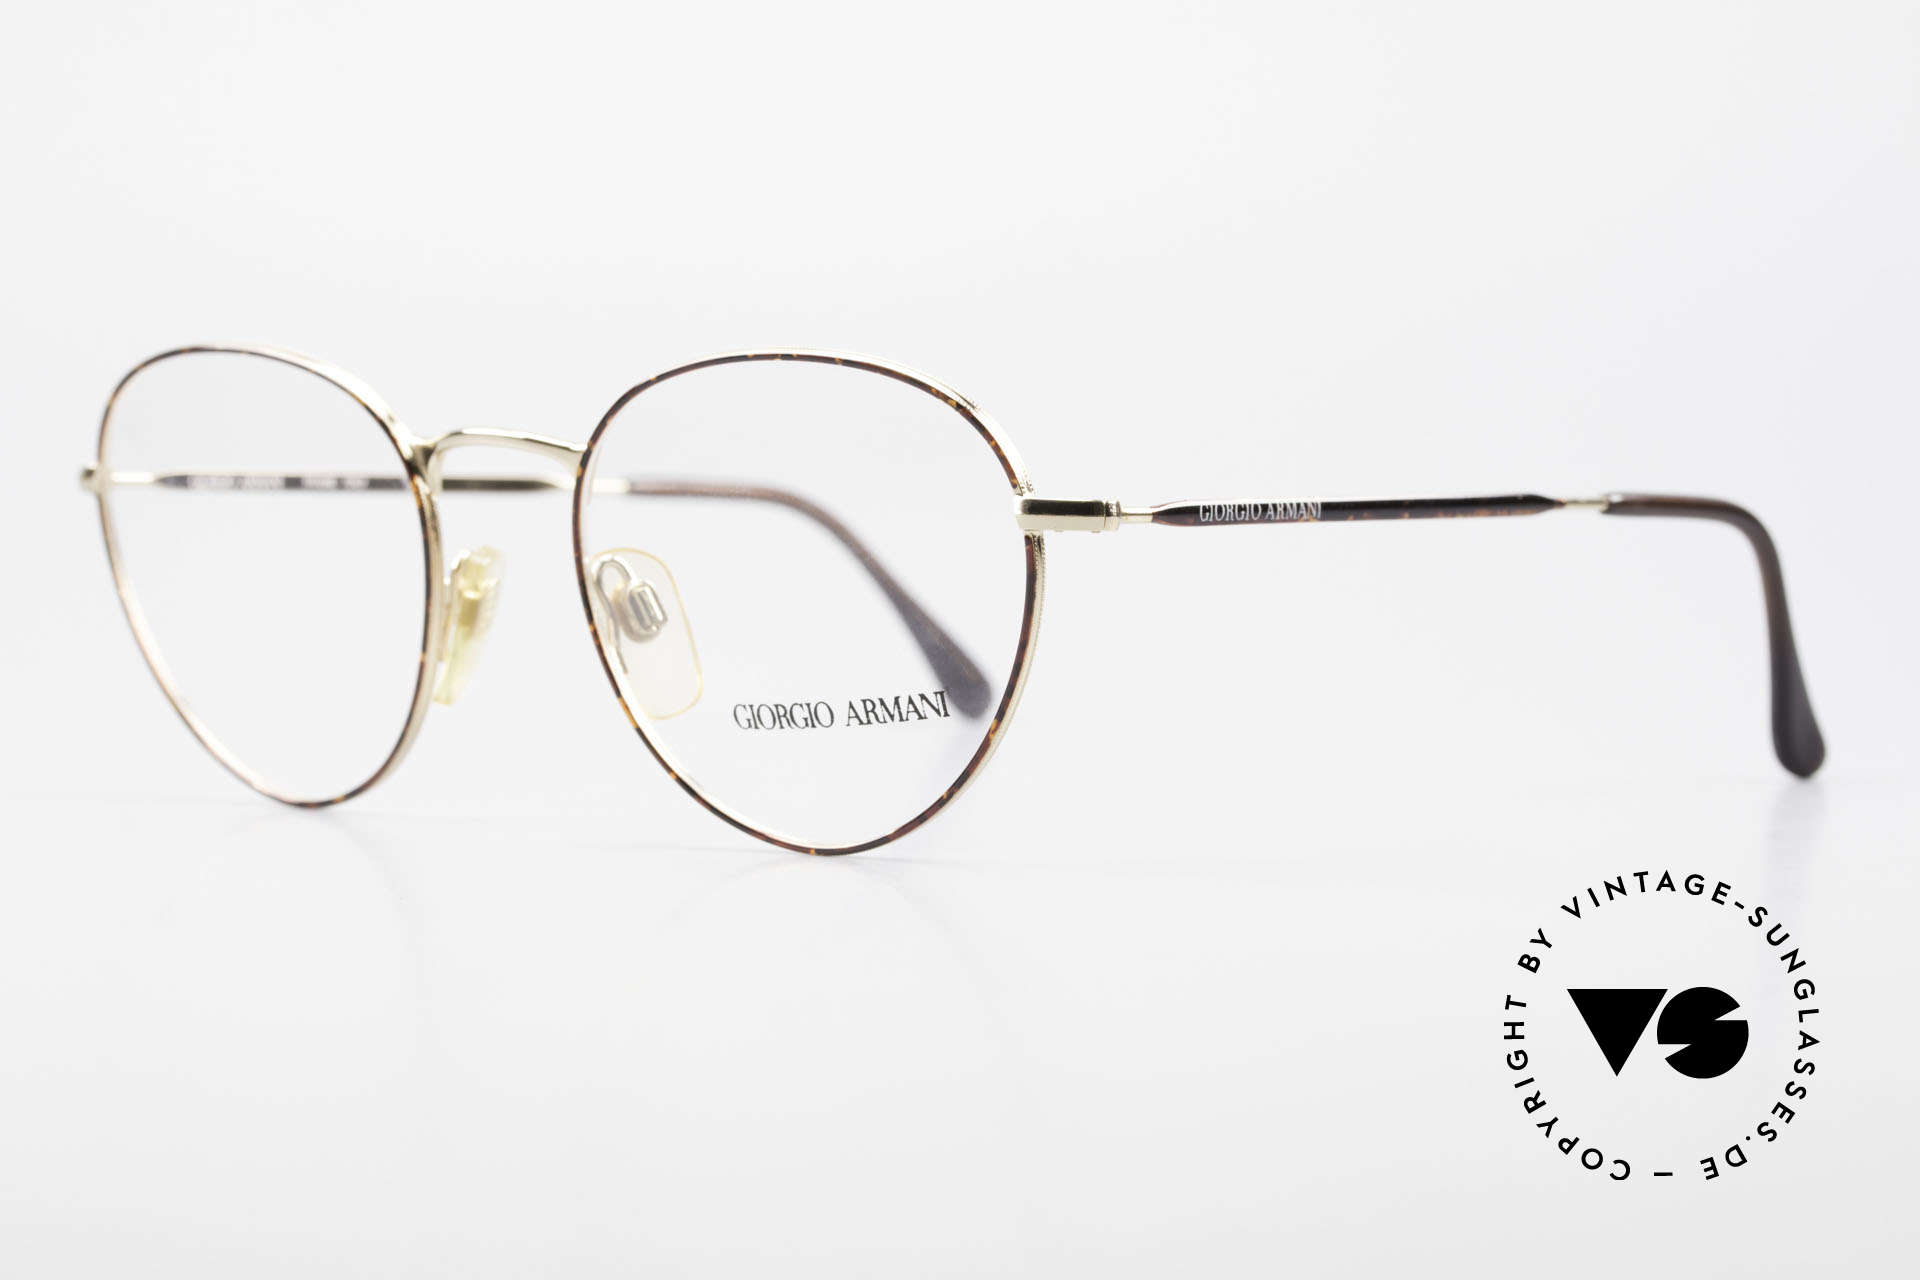 Giorgio Armani 165 Panto Vintage Glasses 80s 90s, noble 'chestnut brown/tortoise/gold' frame coloring, Made for Men